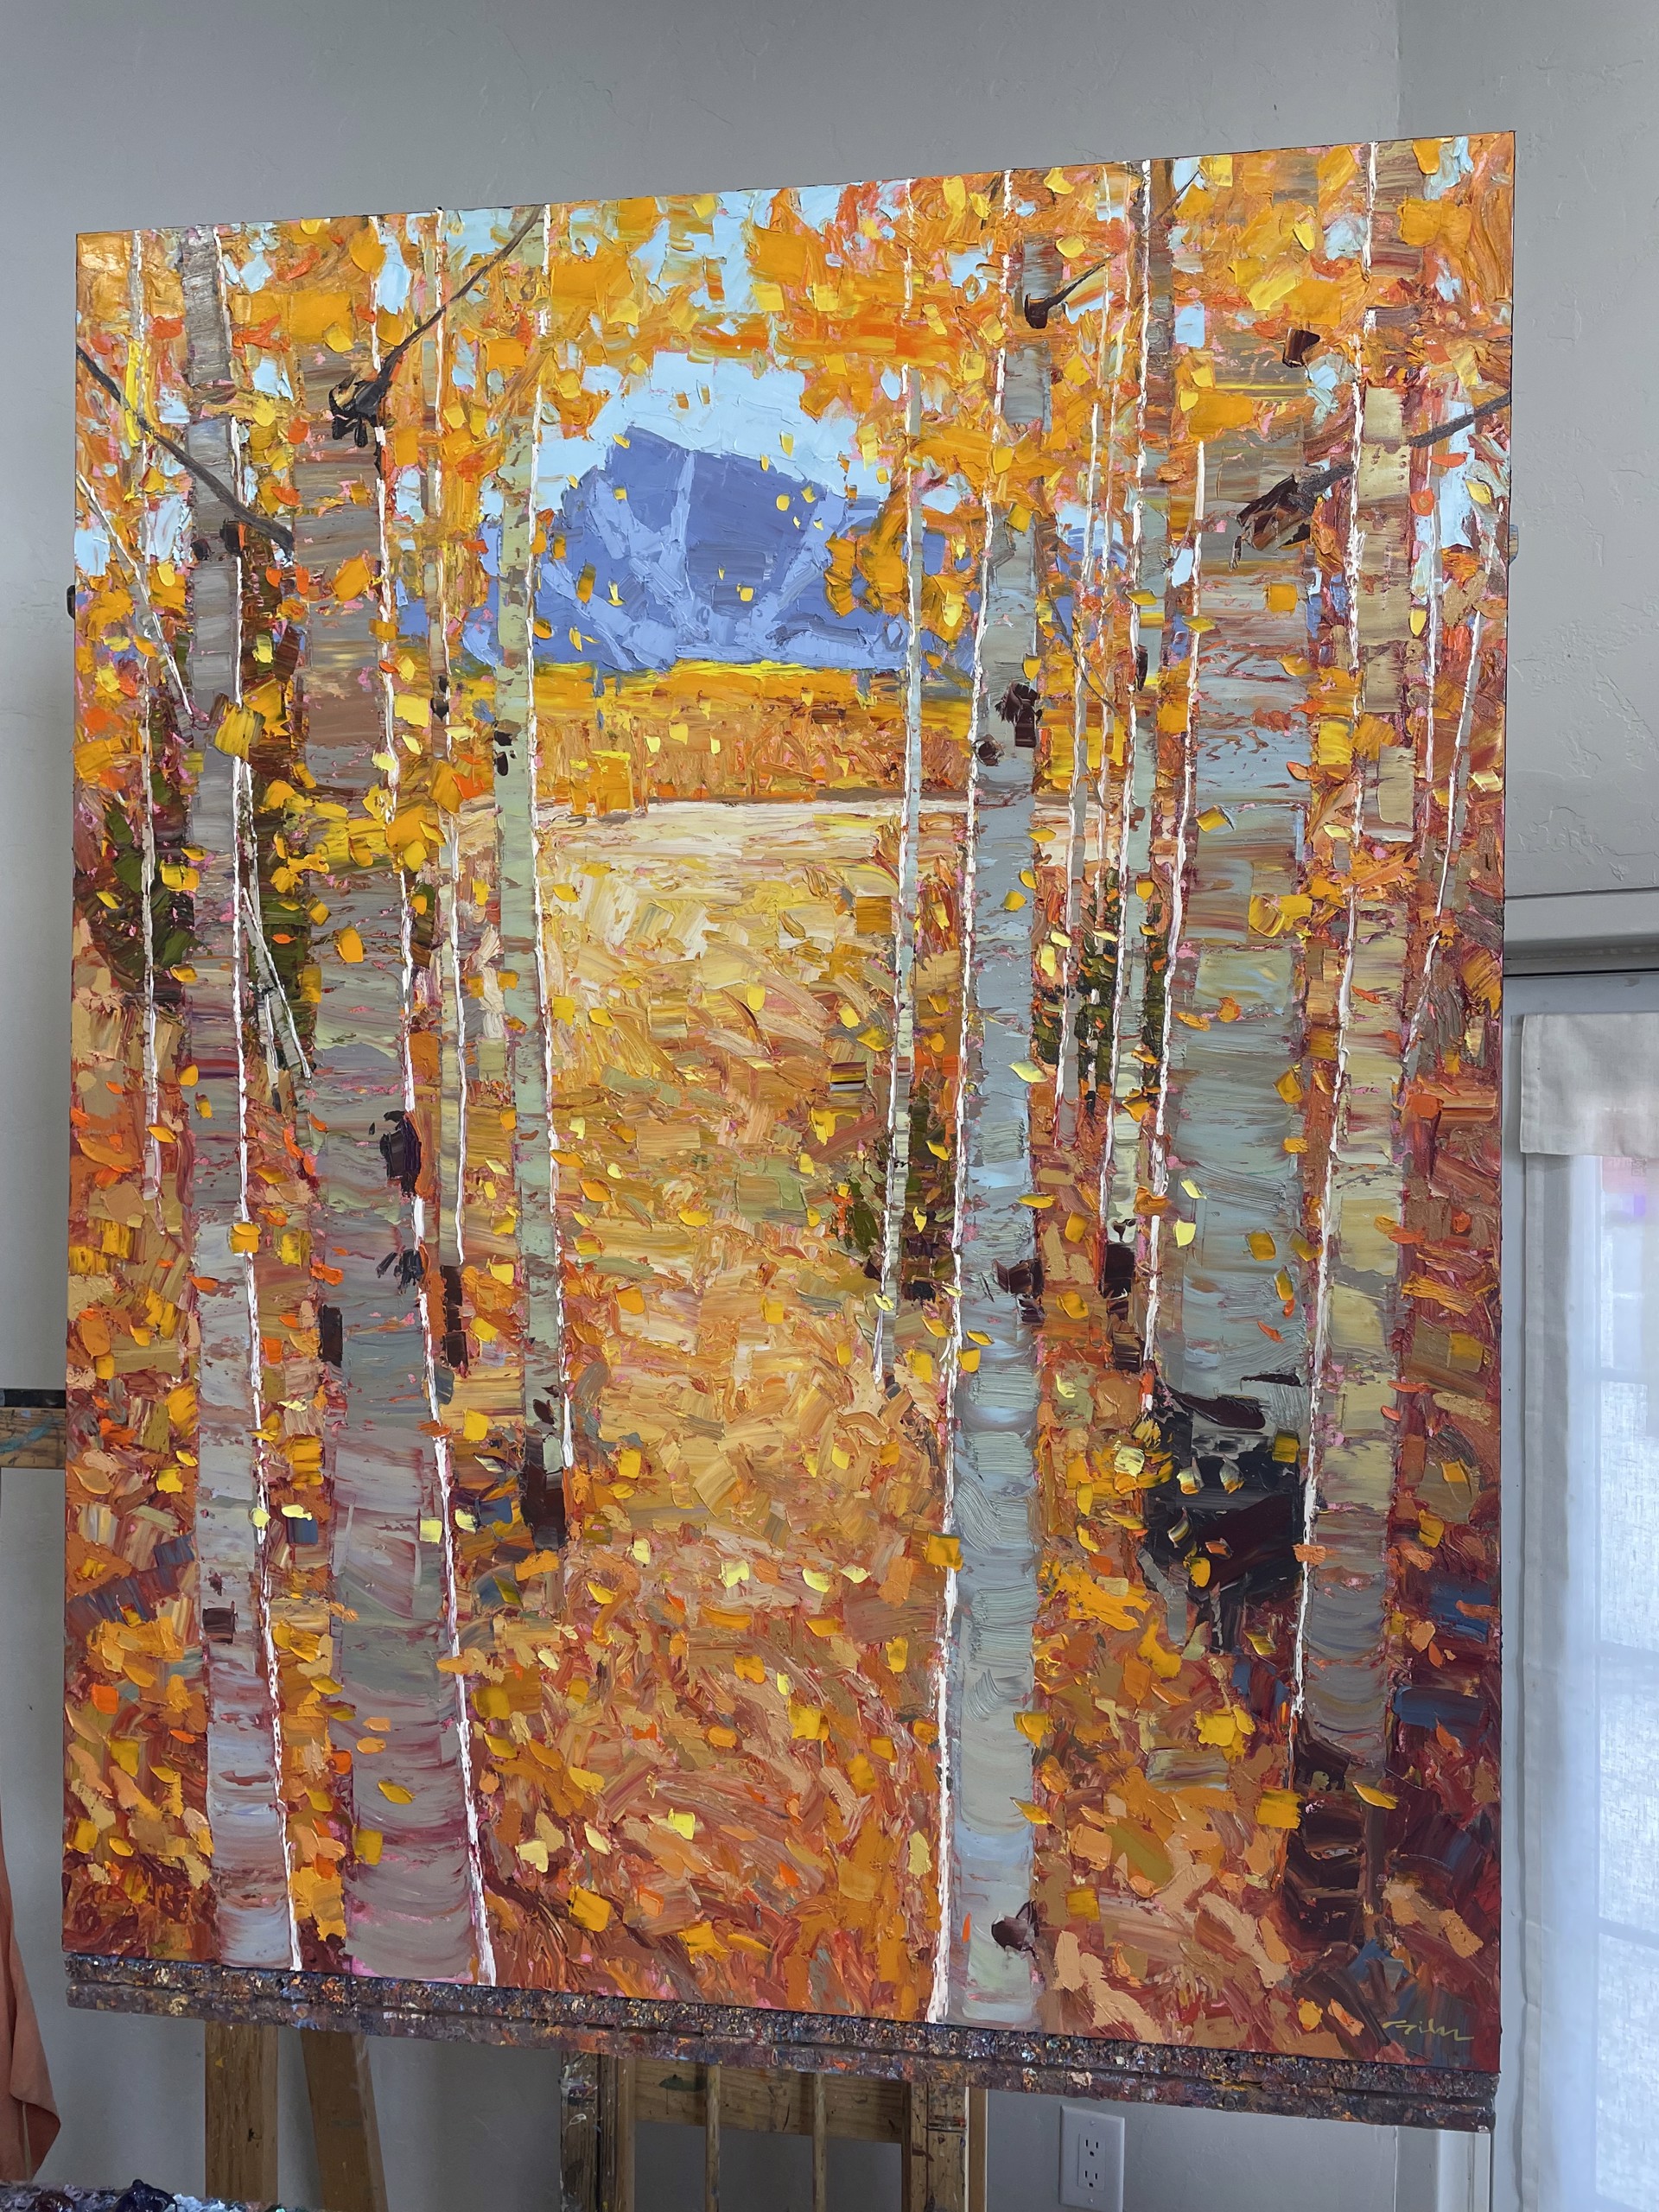 Autumn's Passage by Silas Thompson